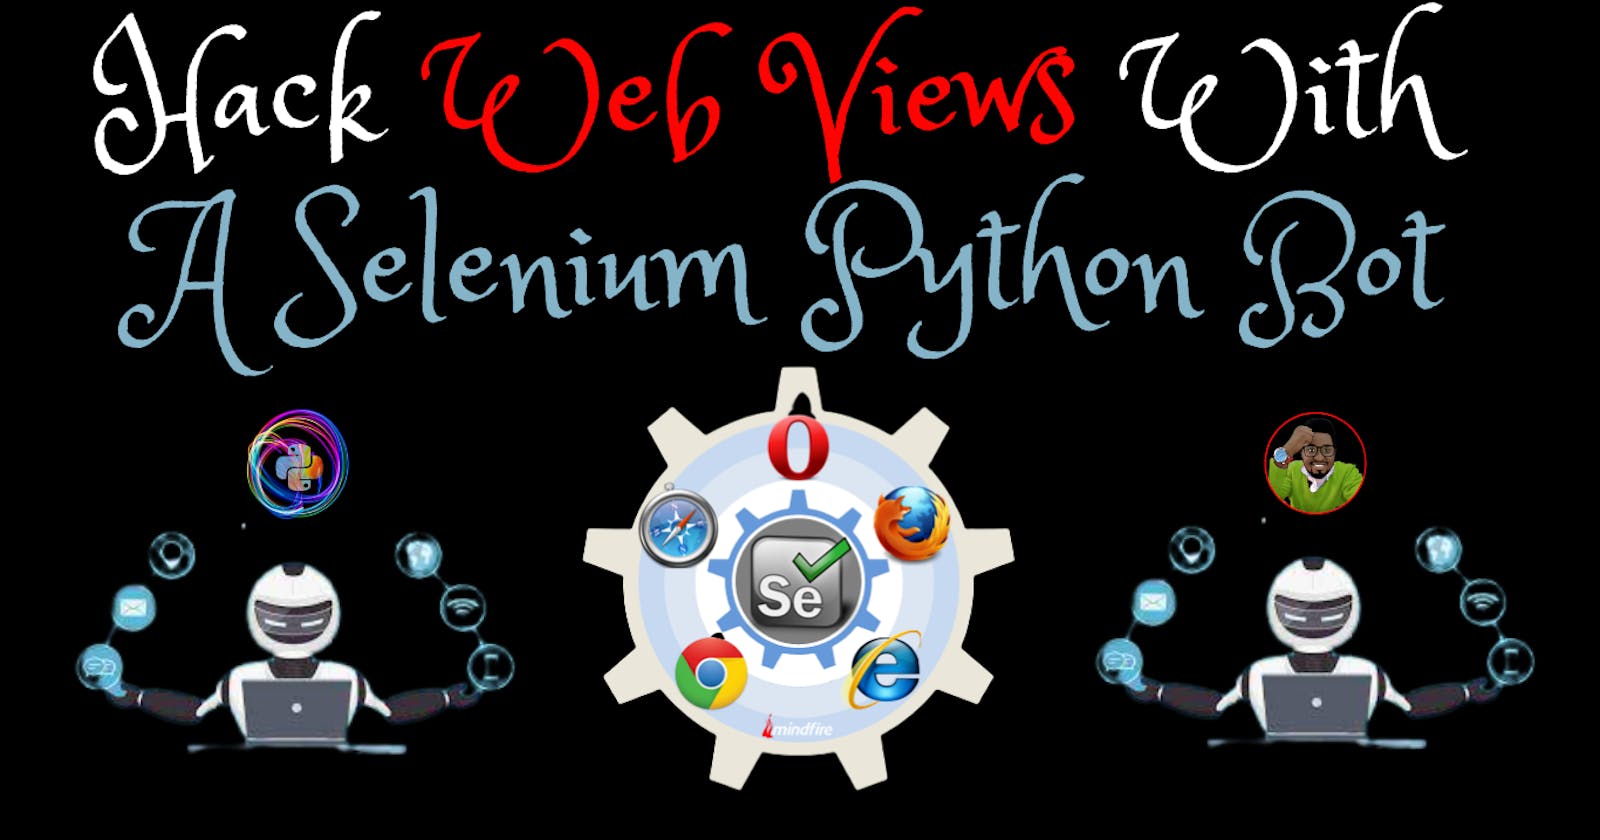 Hack Web Views With A Selenium Python Bot